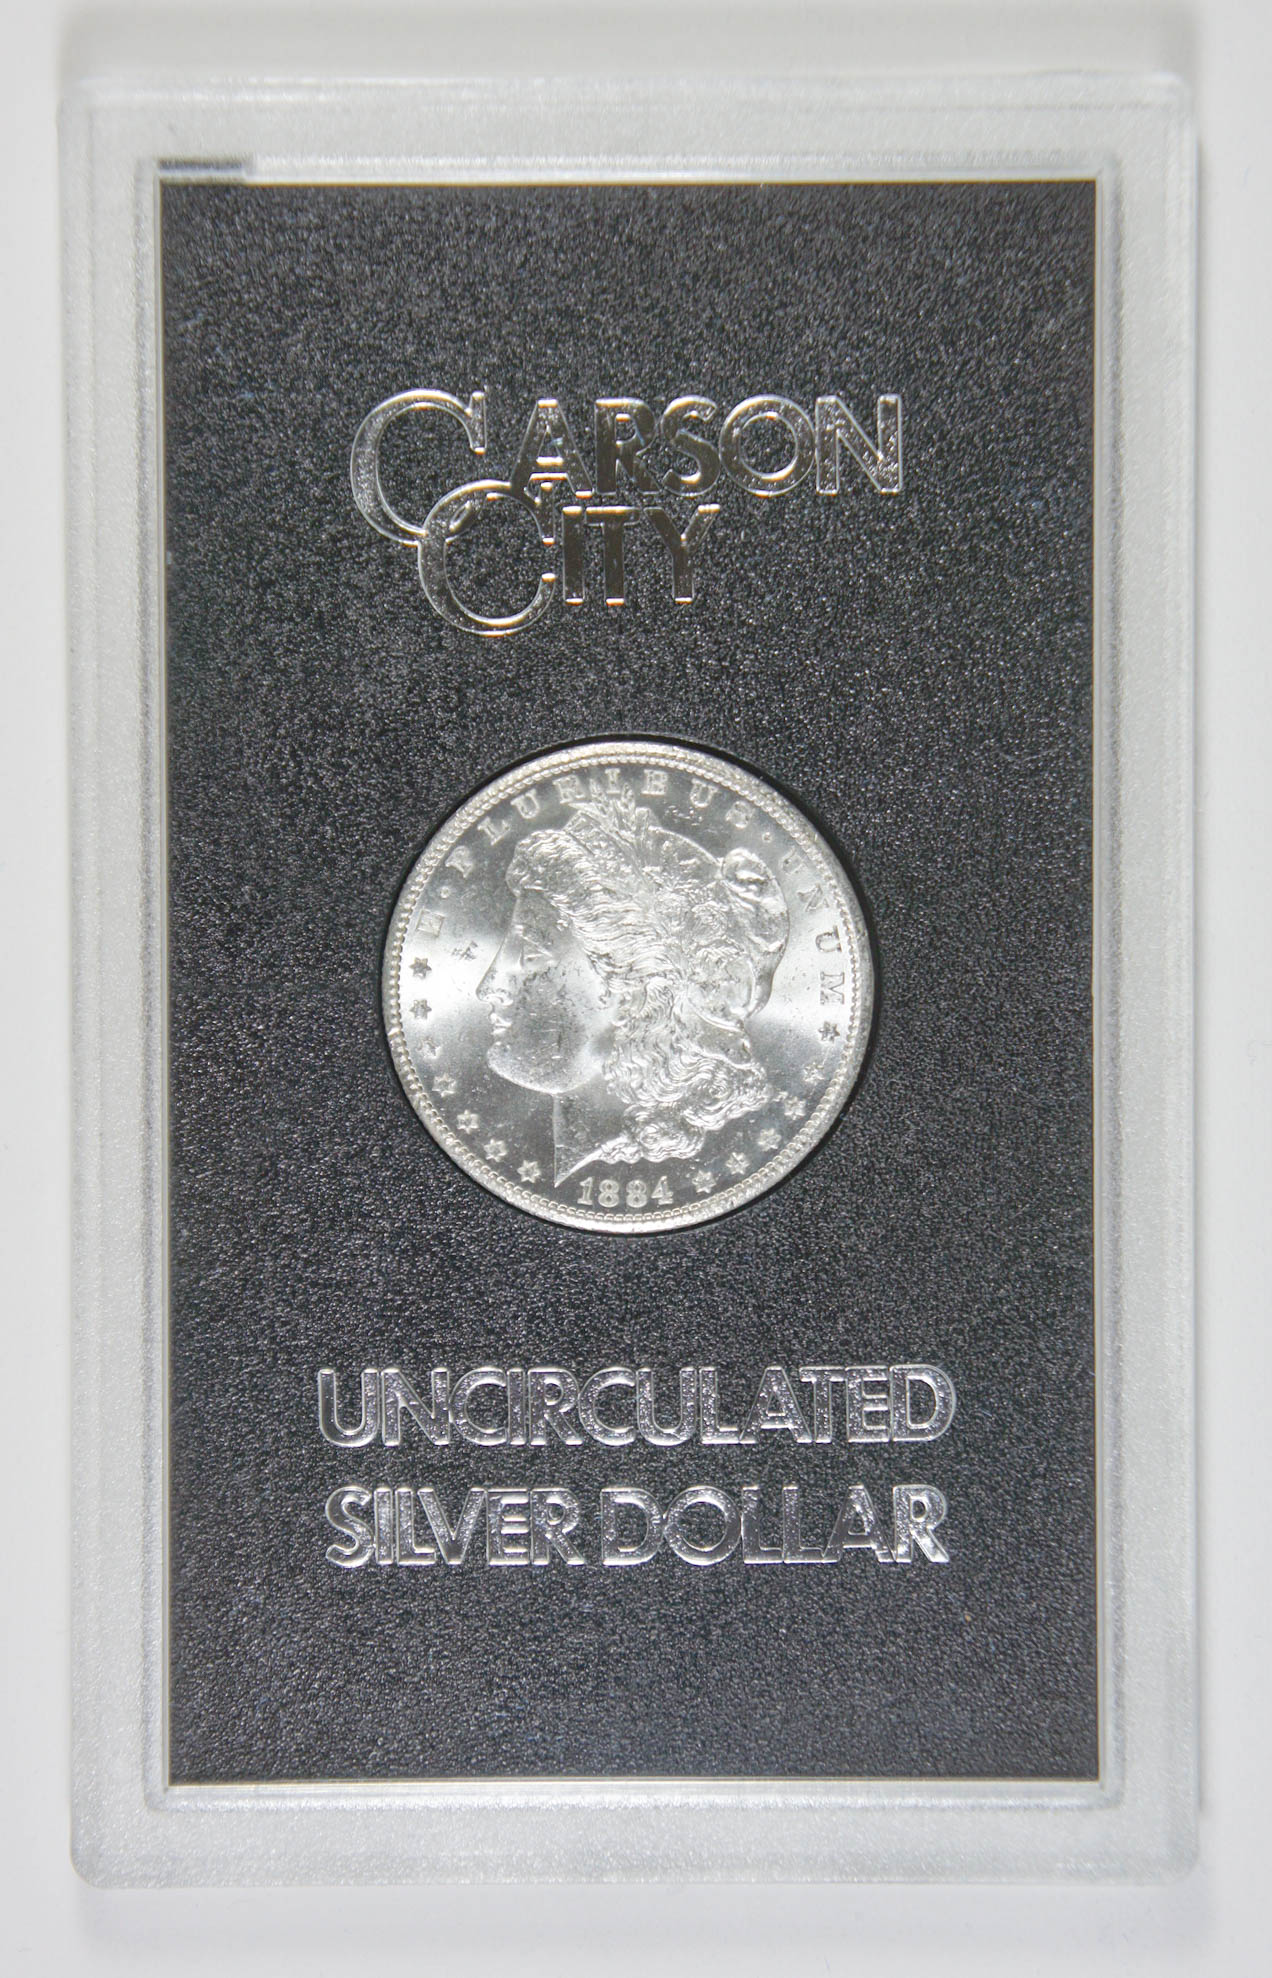 1884-CC GSA Morgan Dollar